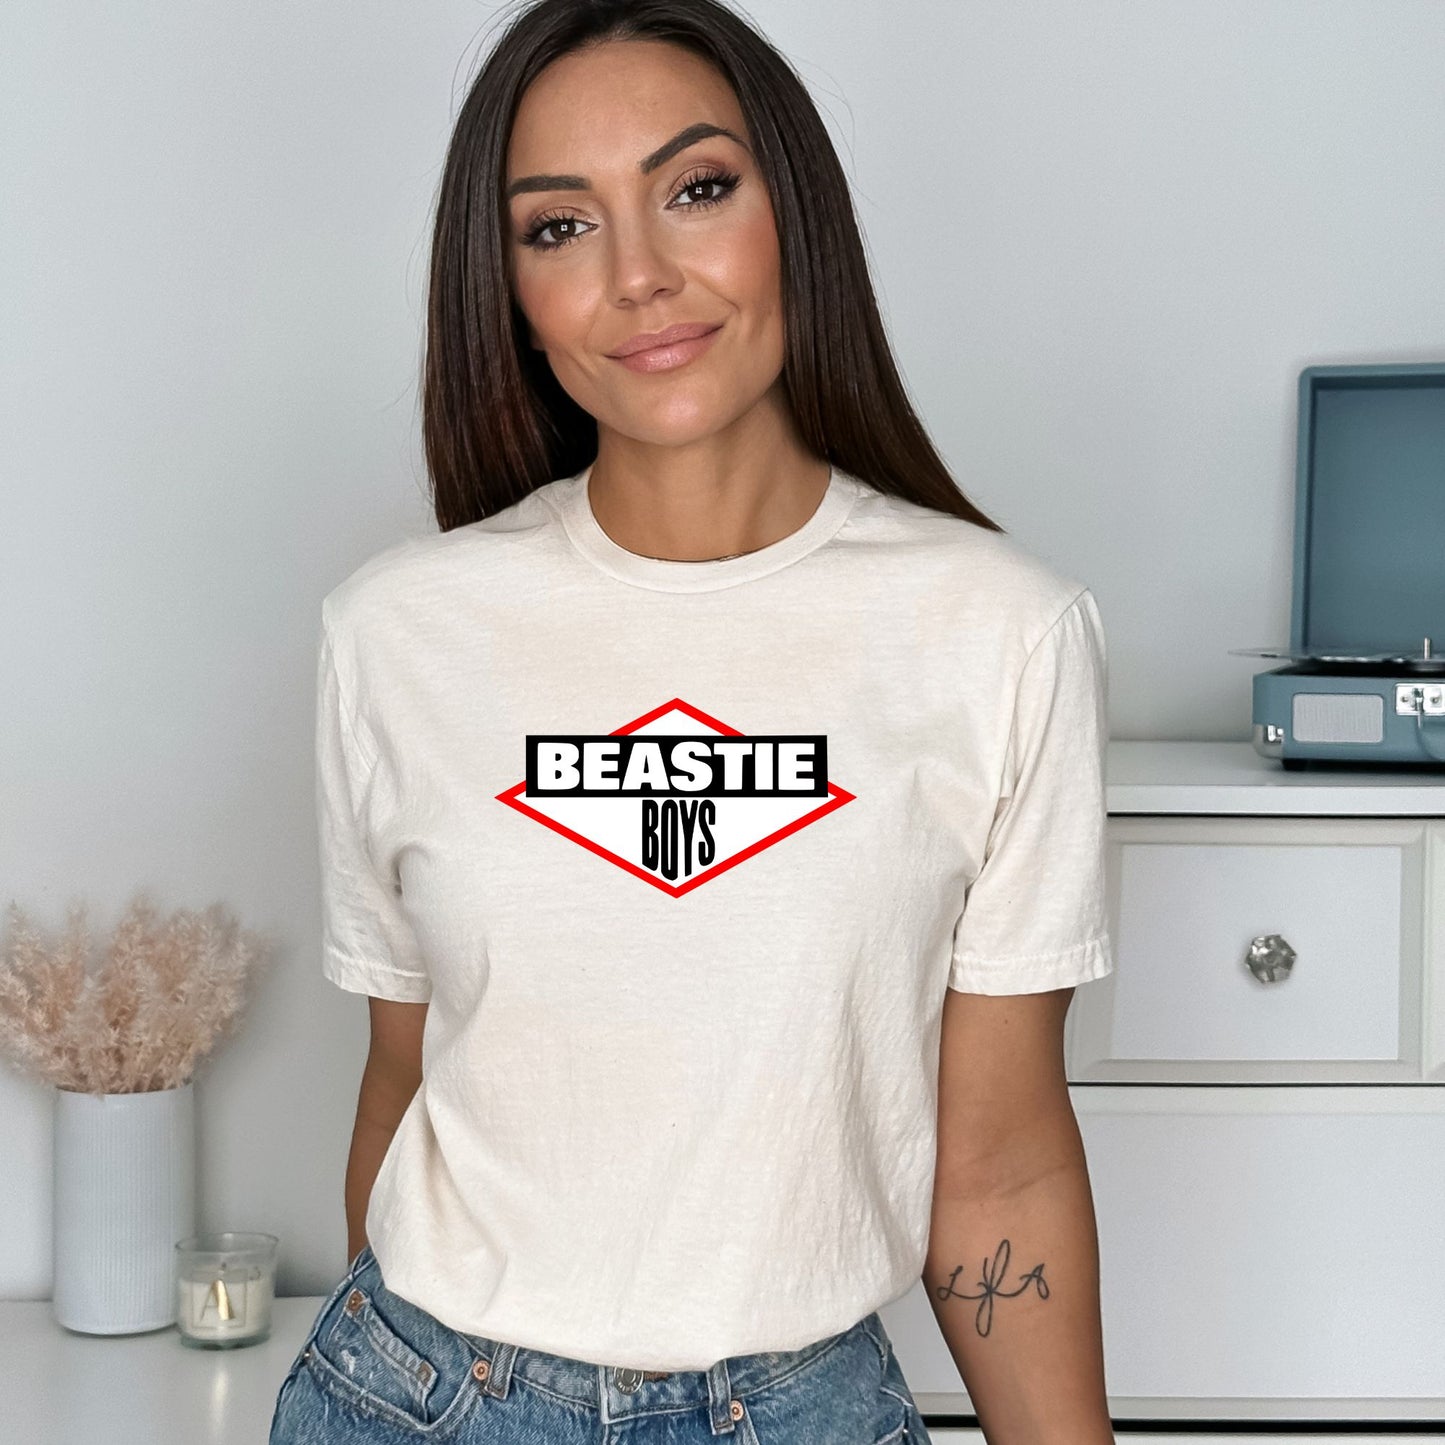 Beastie Boys Adult Unisex T-shirt